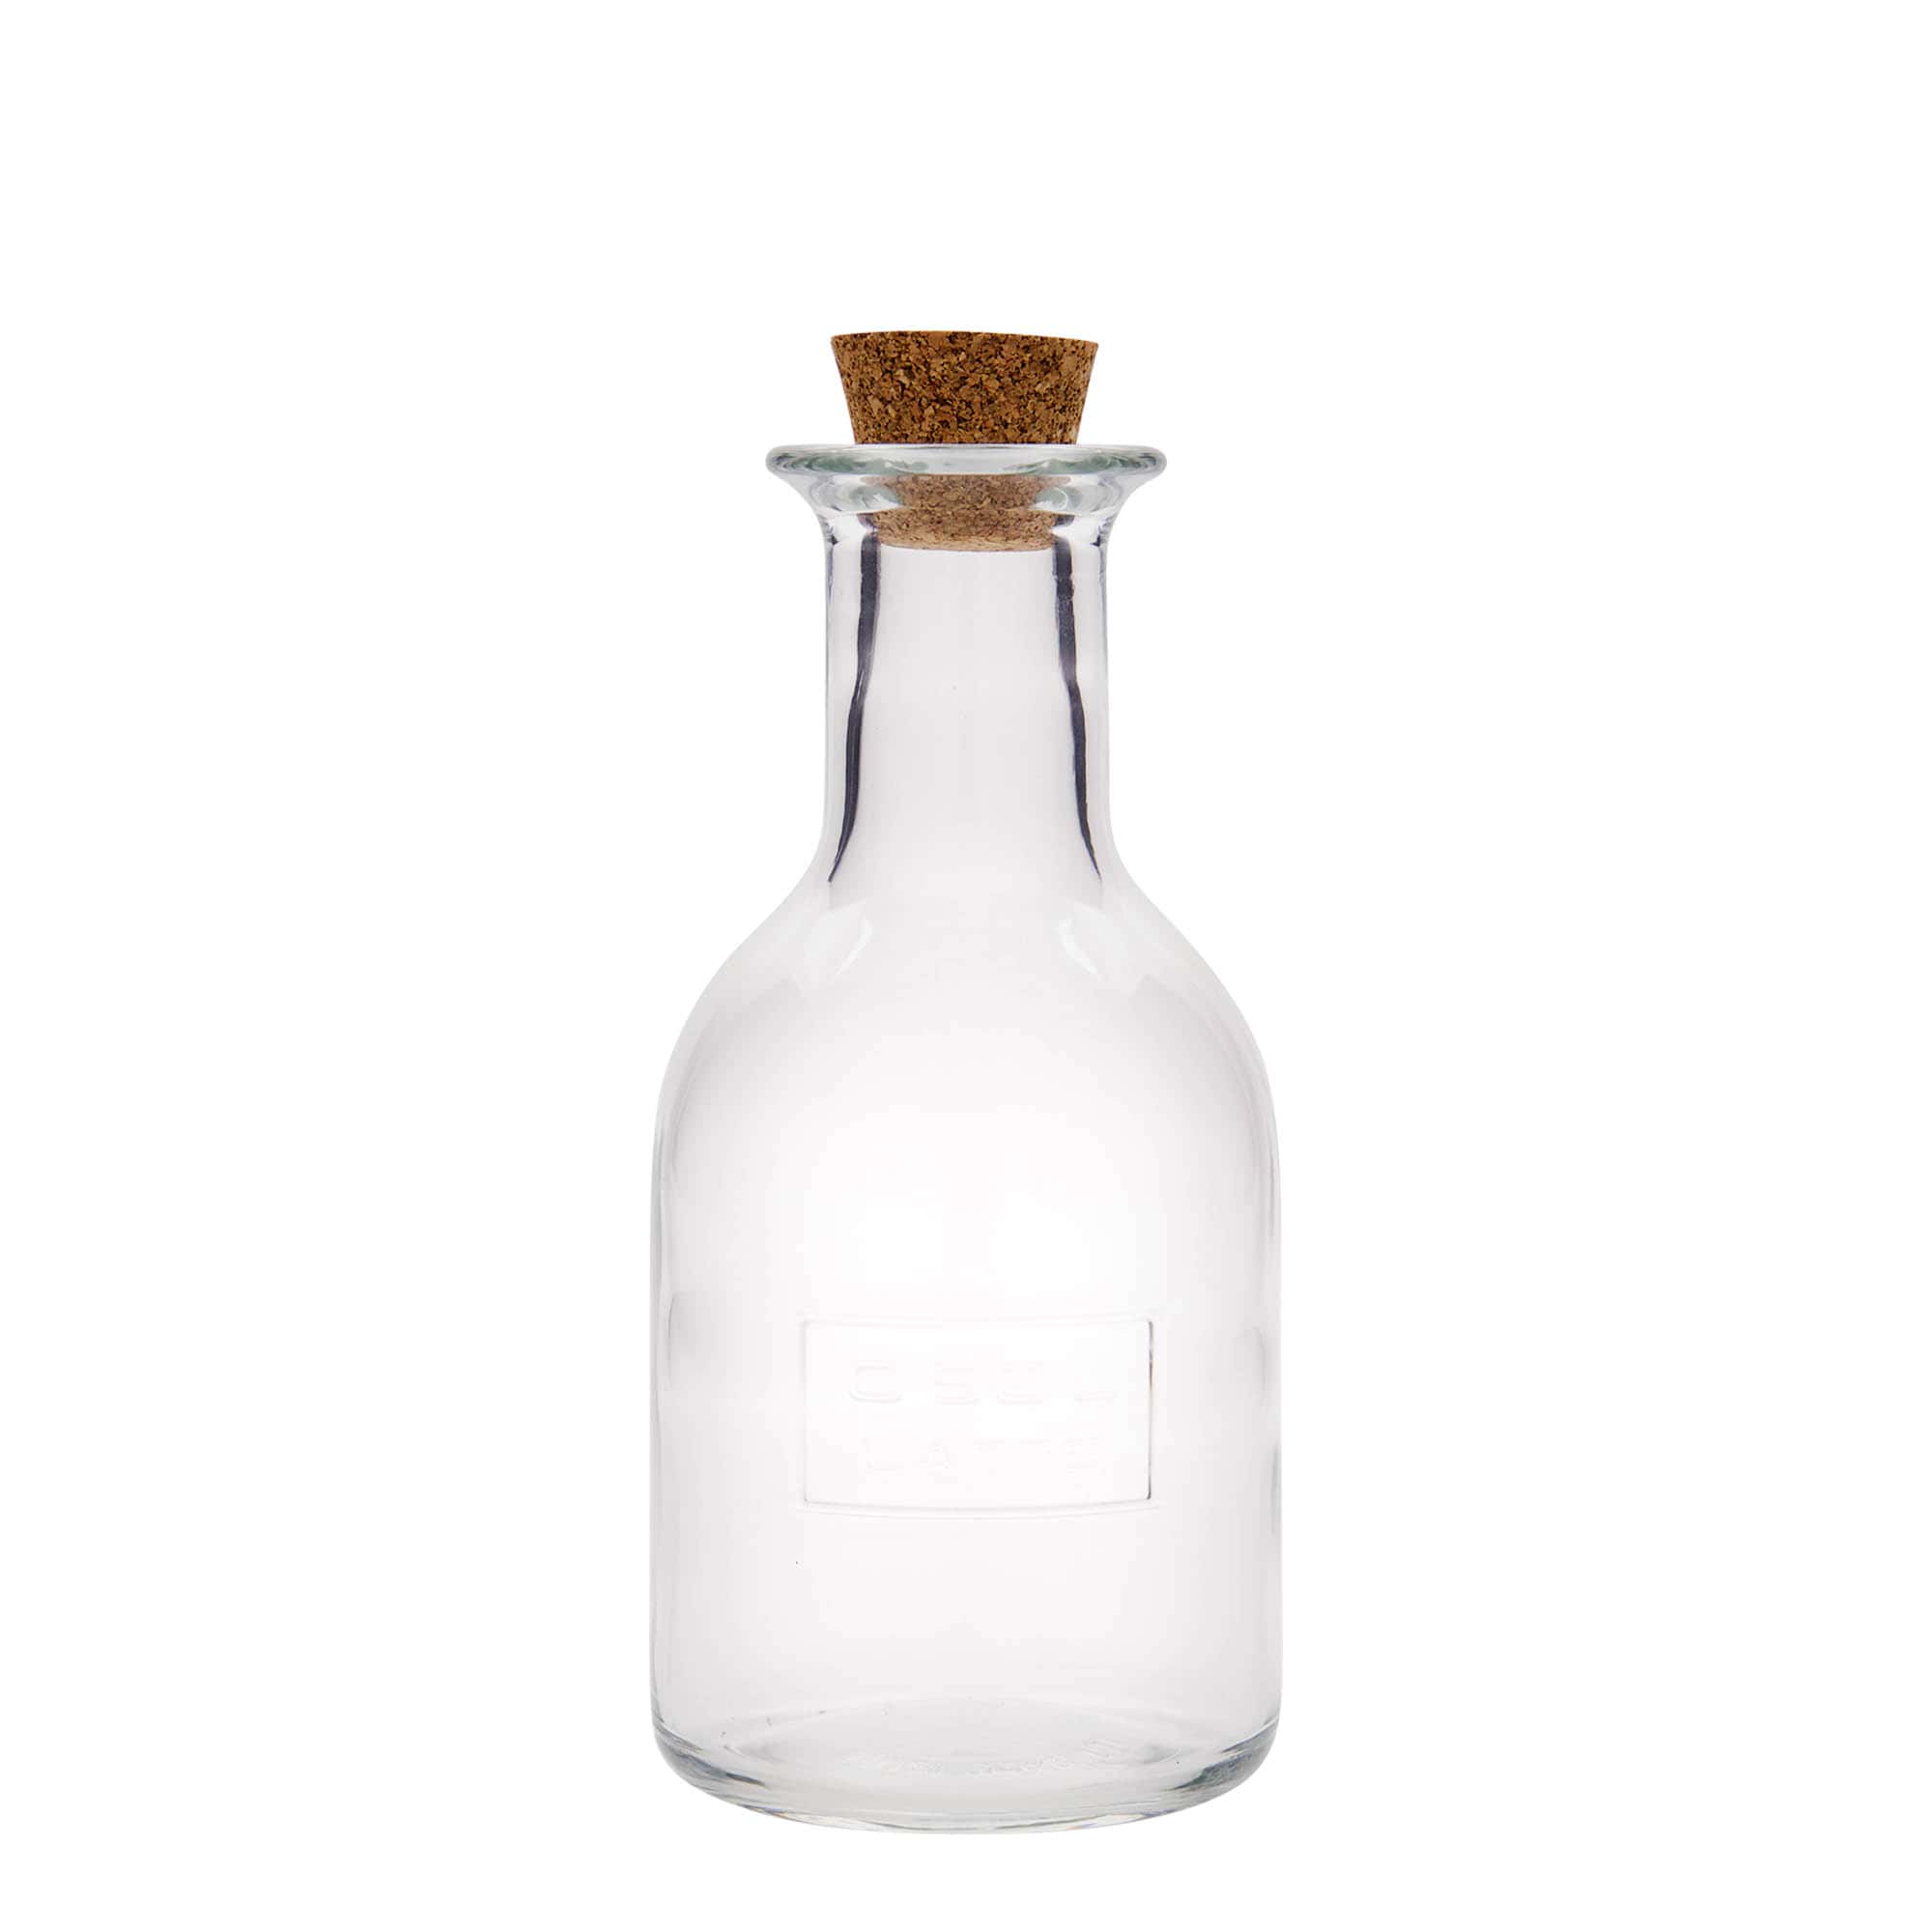 500 ml glass bottle 'Optima Latte', closure: cork